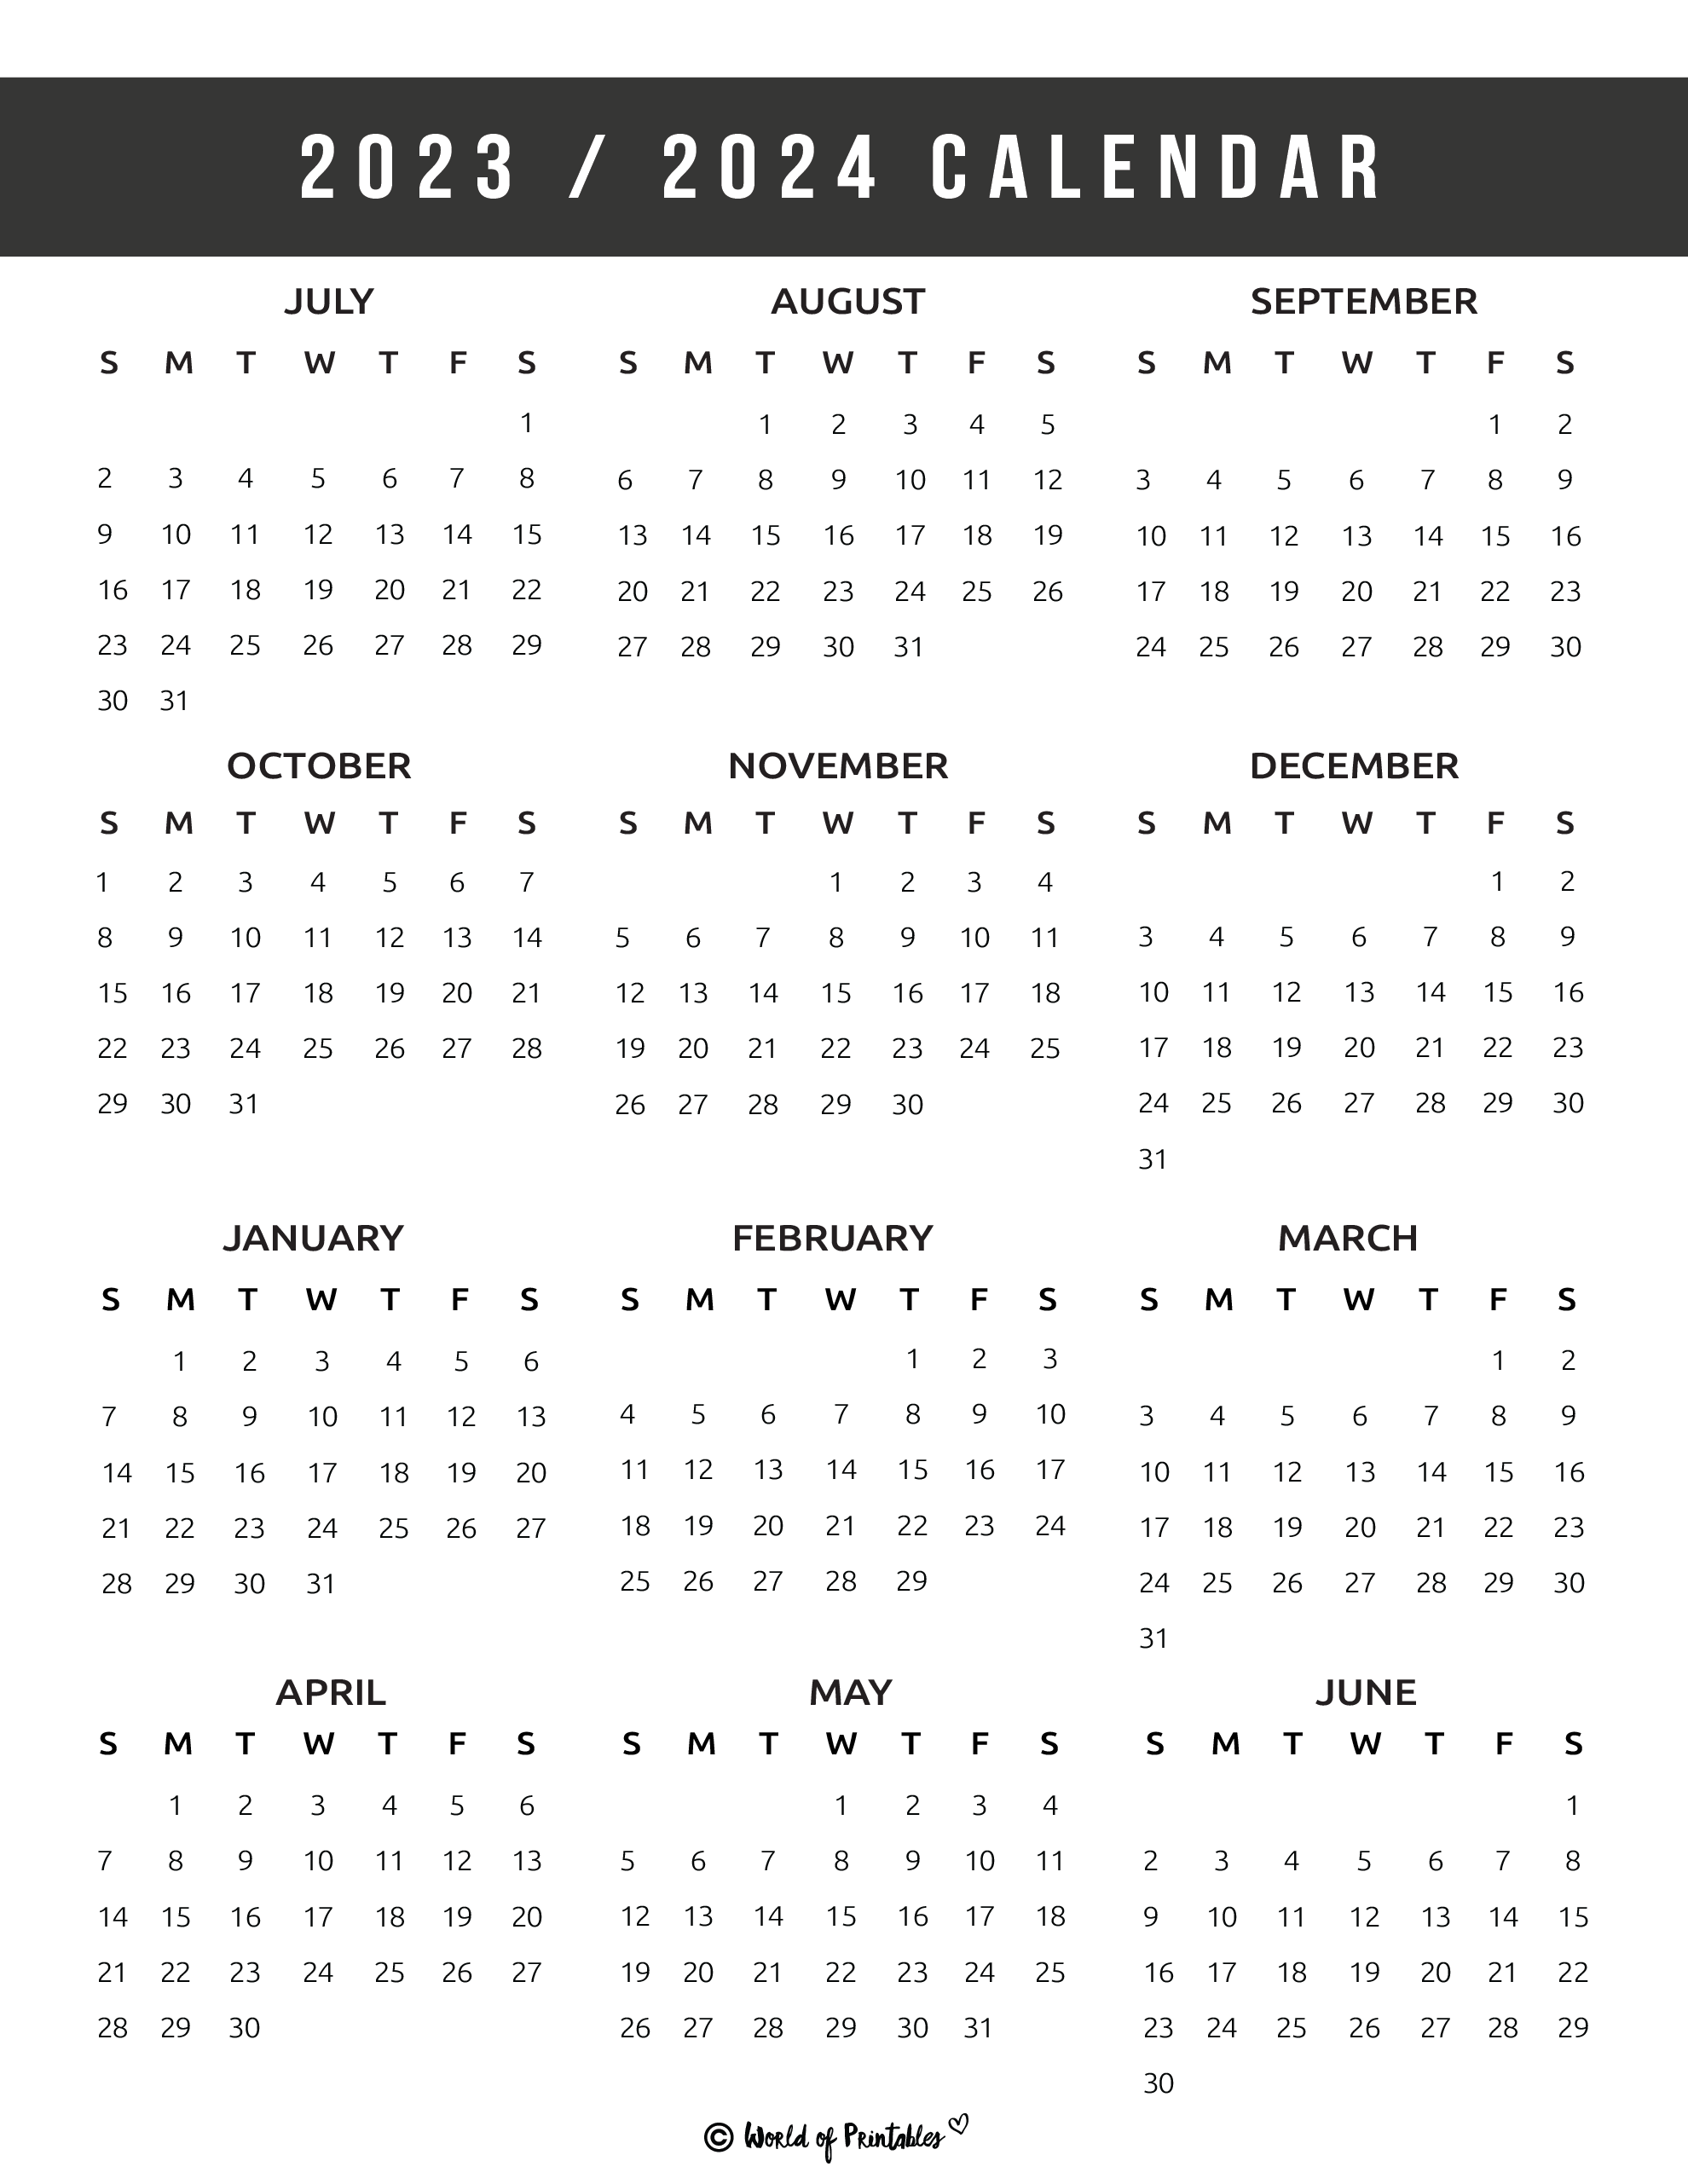 2023 2024 Calendar Free Printables - World Of Printables for August 2023-May 2024 Calendar Printable